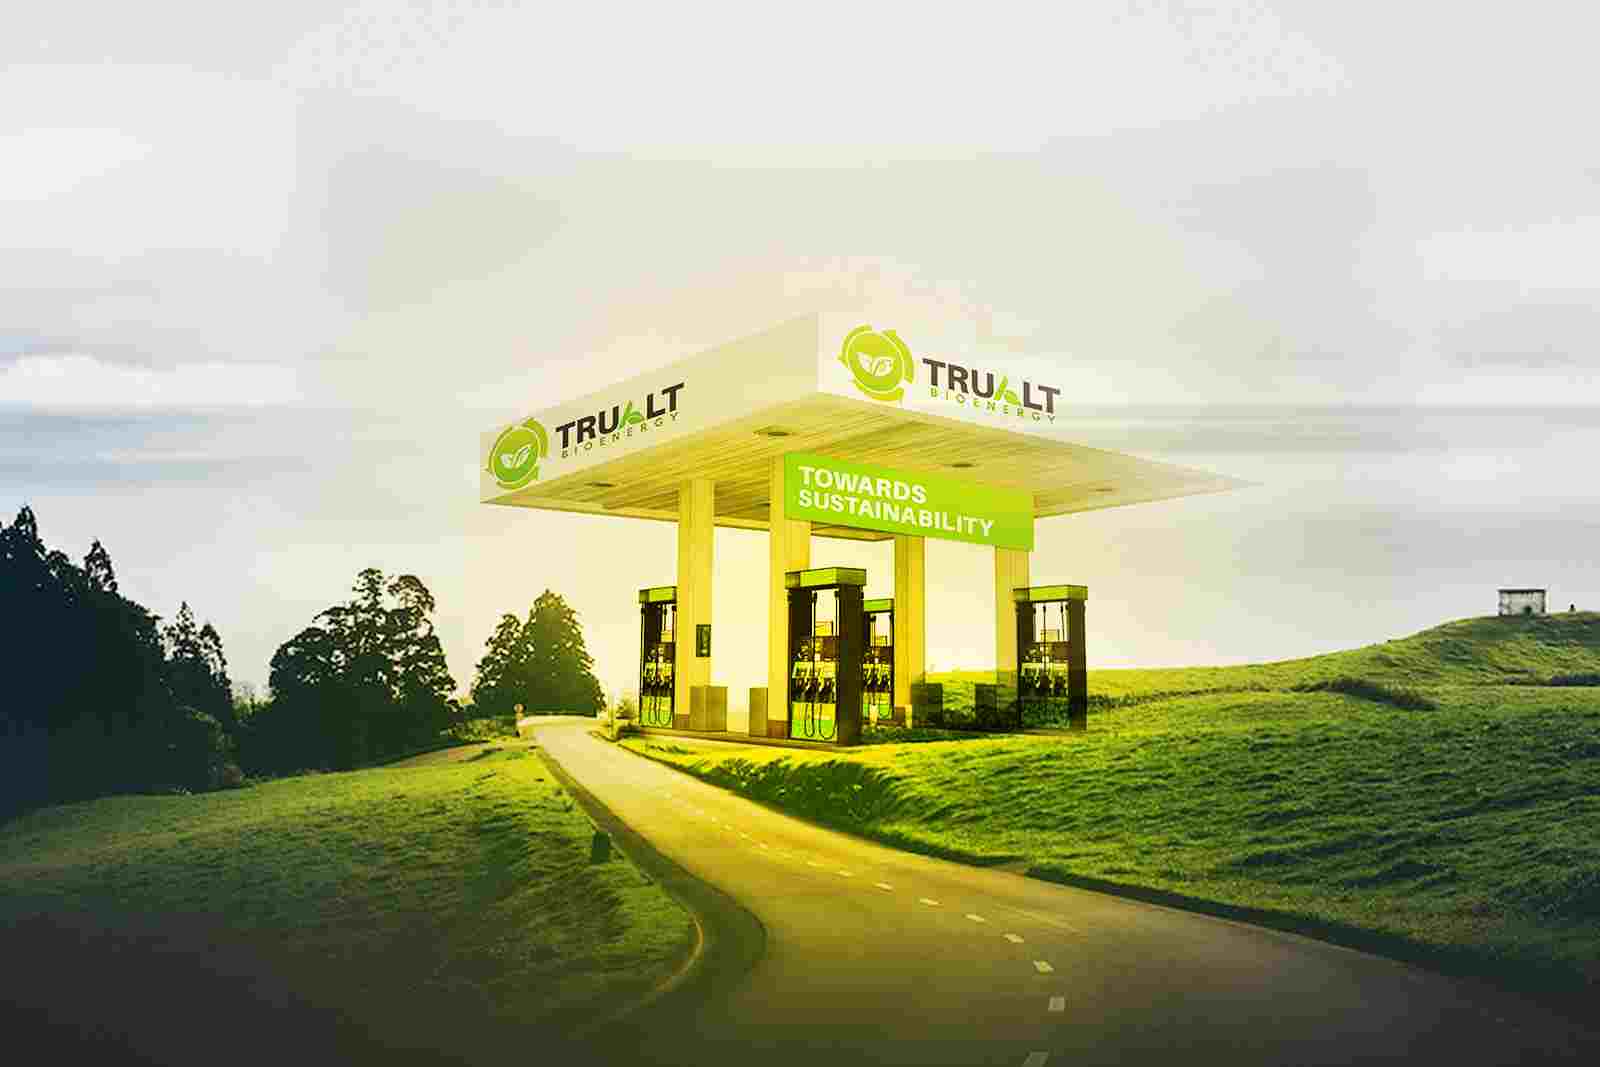 TruAlt Bioenergy ethanol biofuels biogas renewable CBG plant